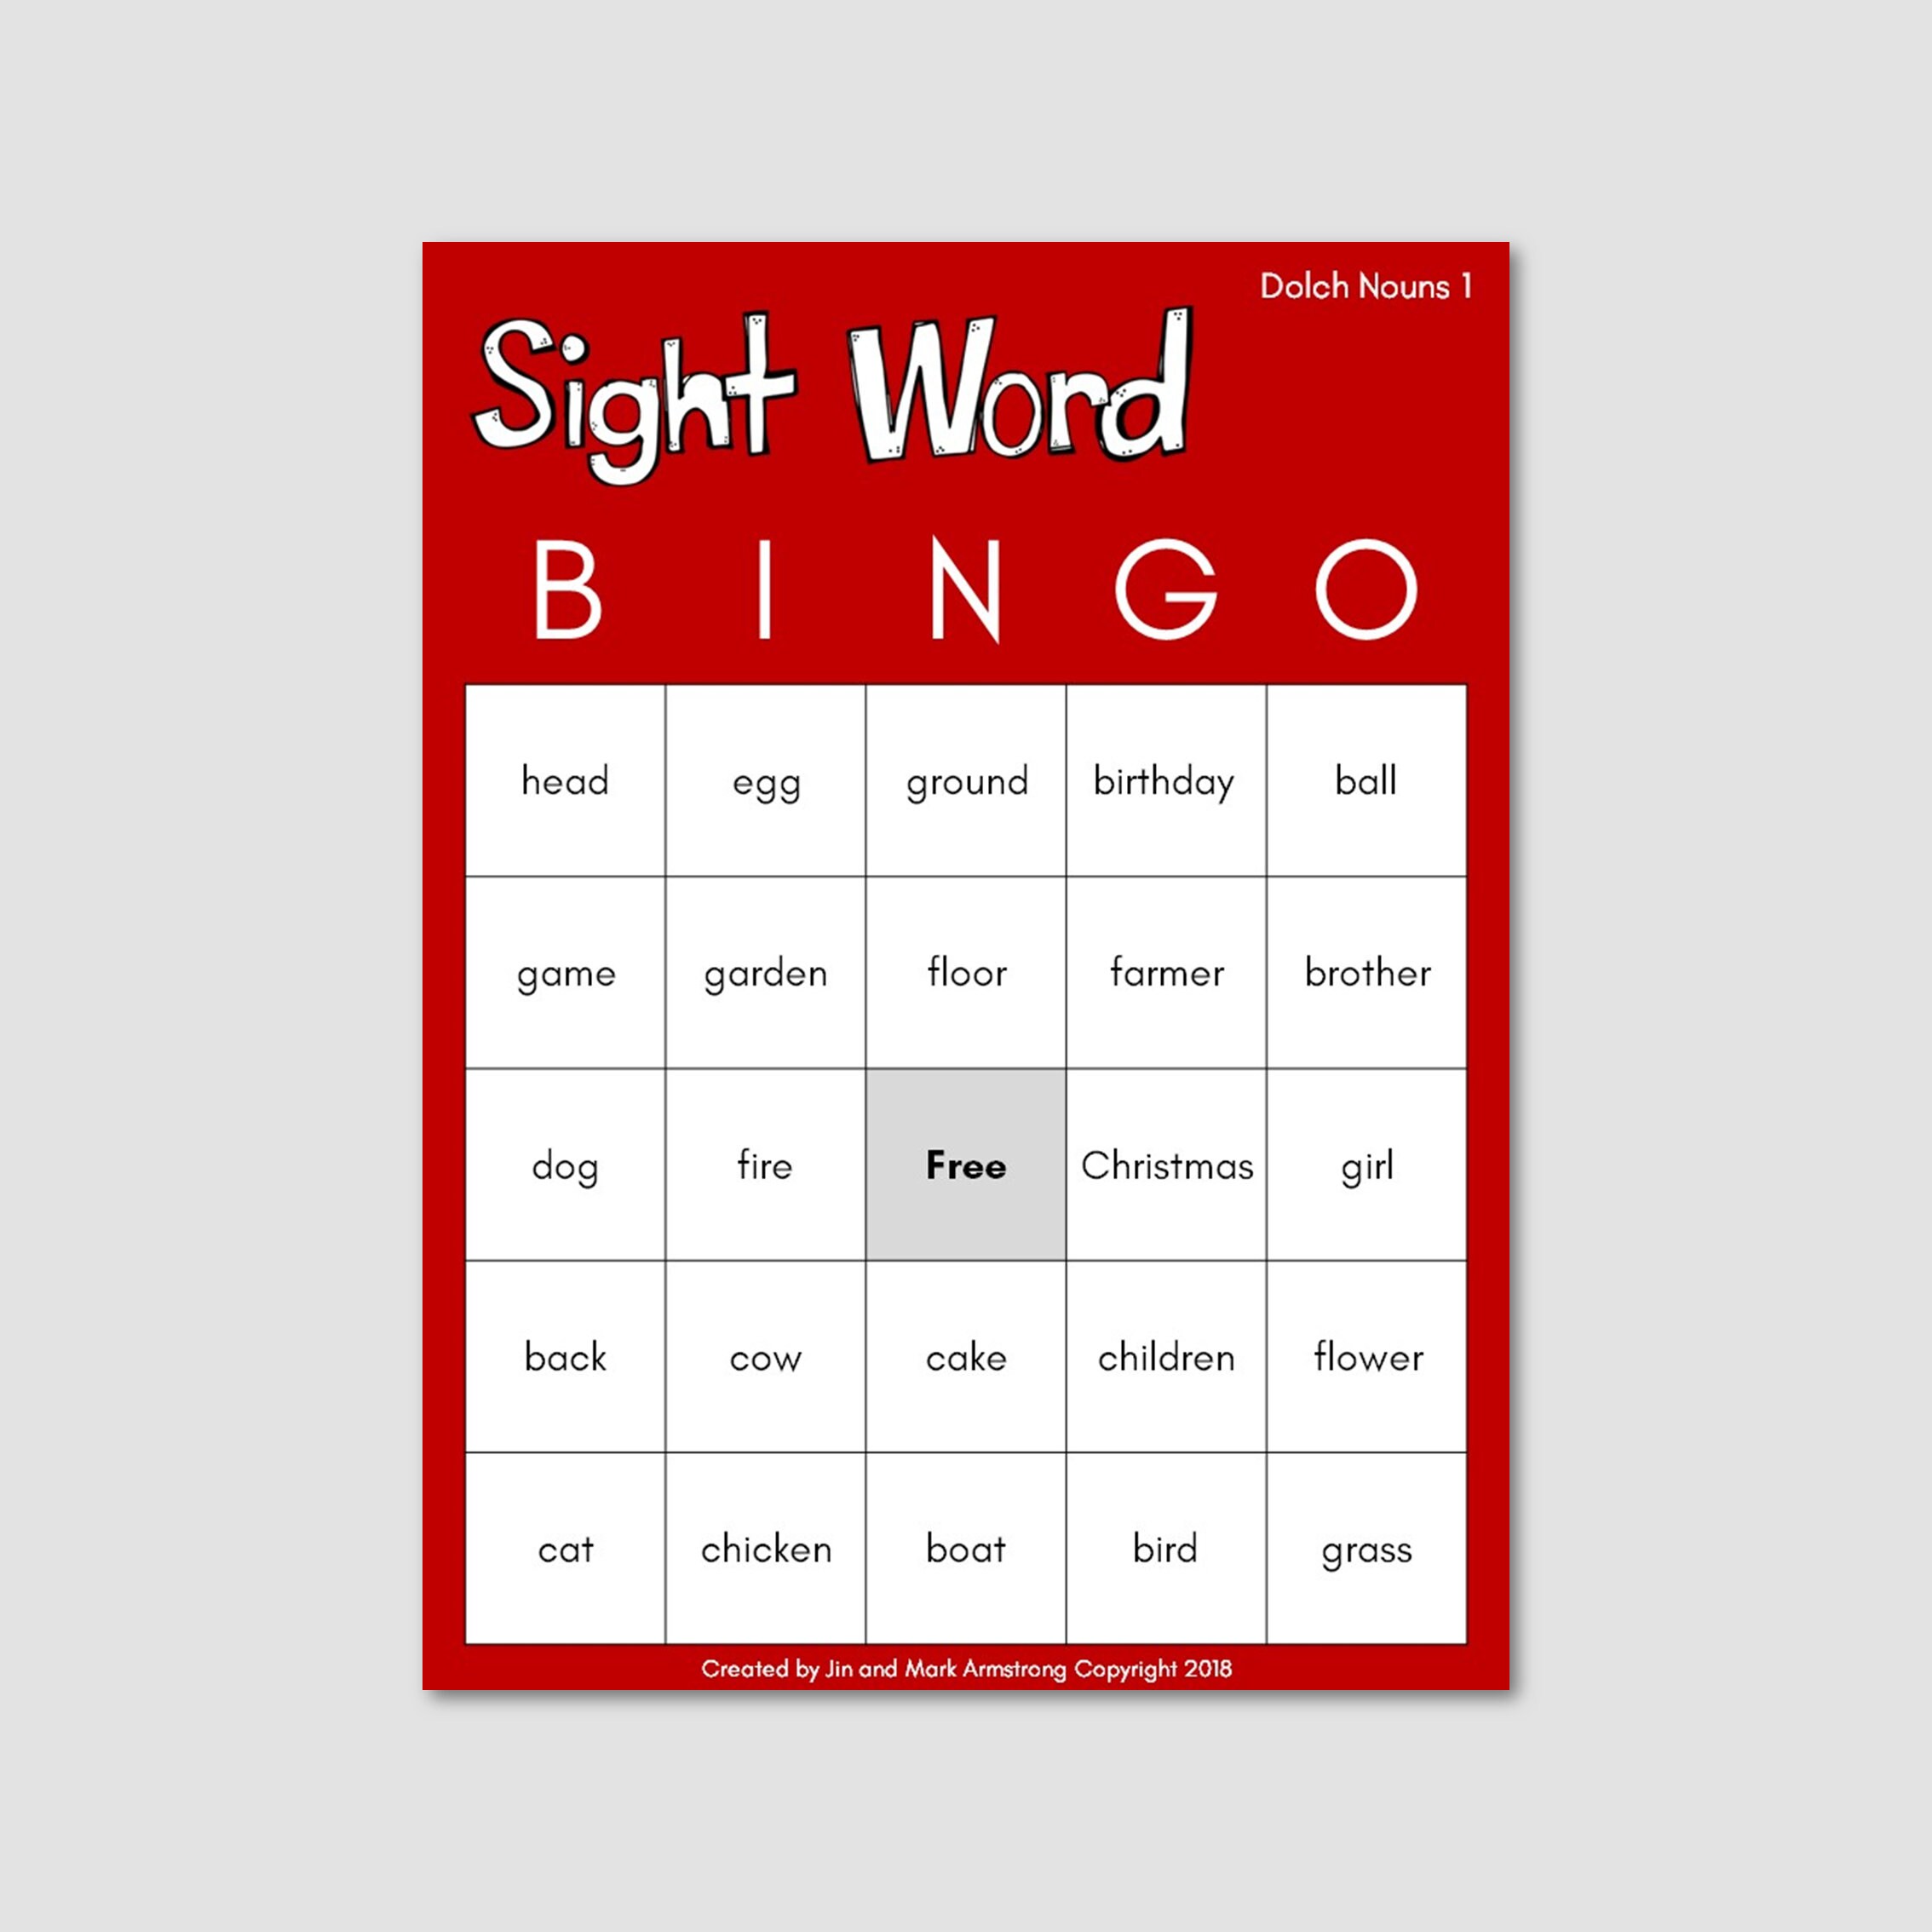 dolch-nouns-sight-word-bingo-flashcards-dominoes-uno-etsy-uk